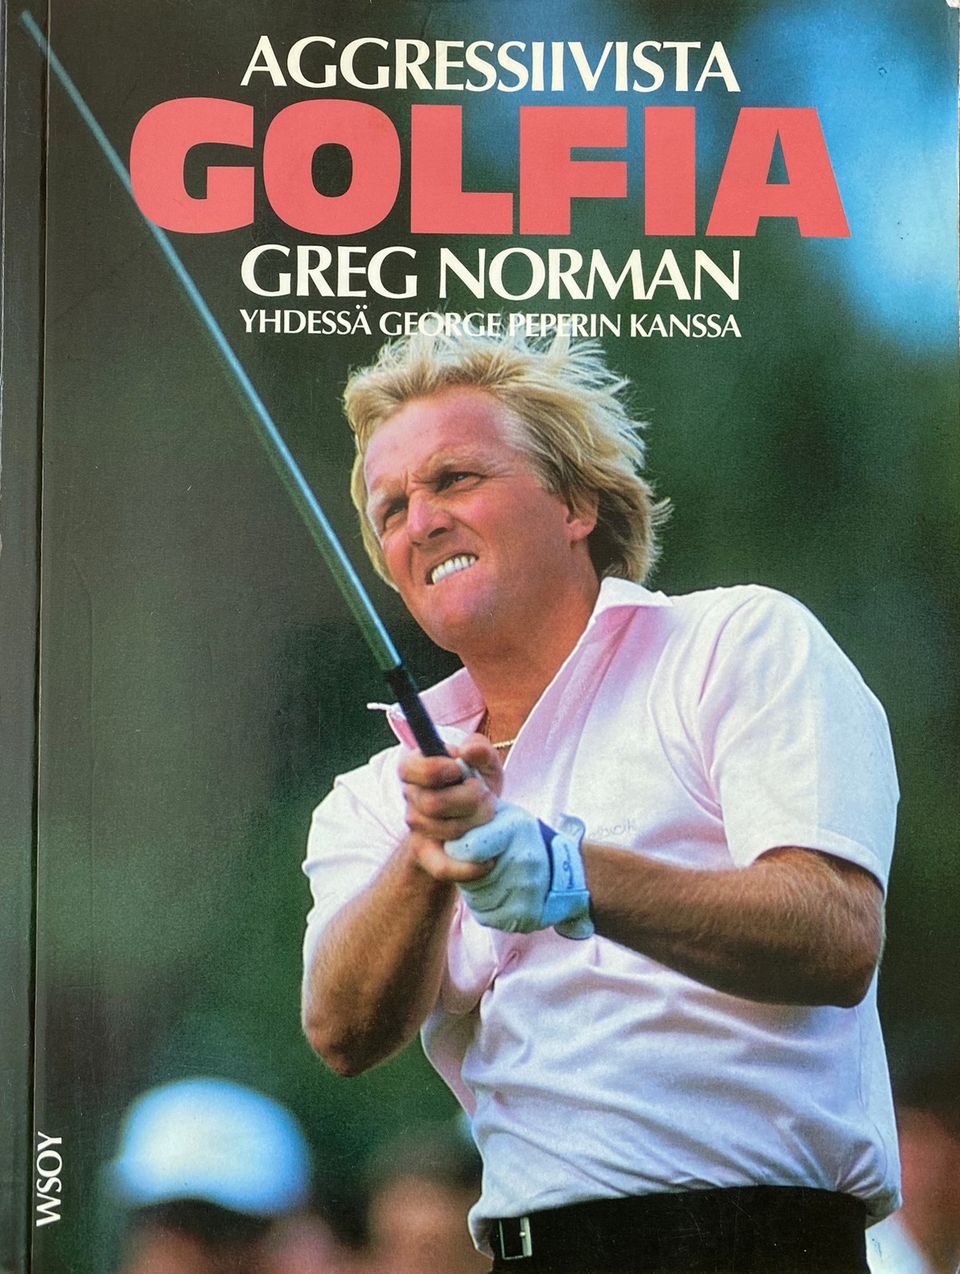 Greg Norman, Aggressiivista golfia -kirja.